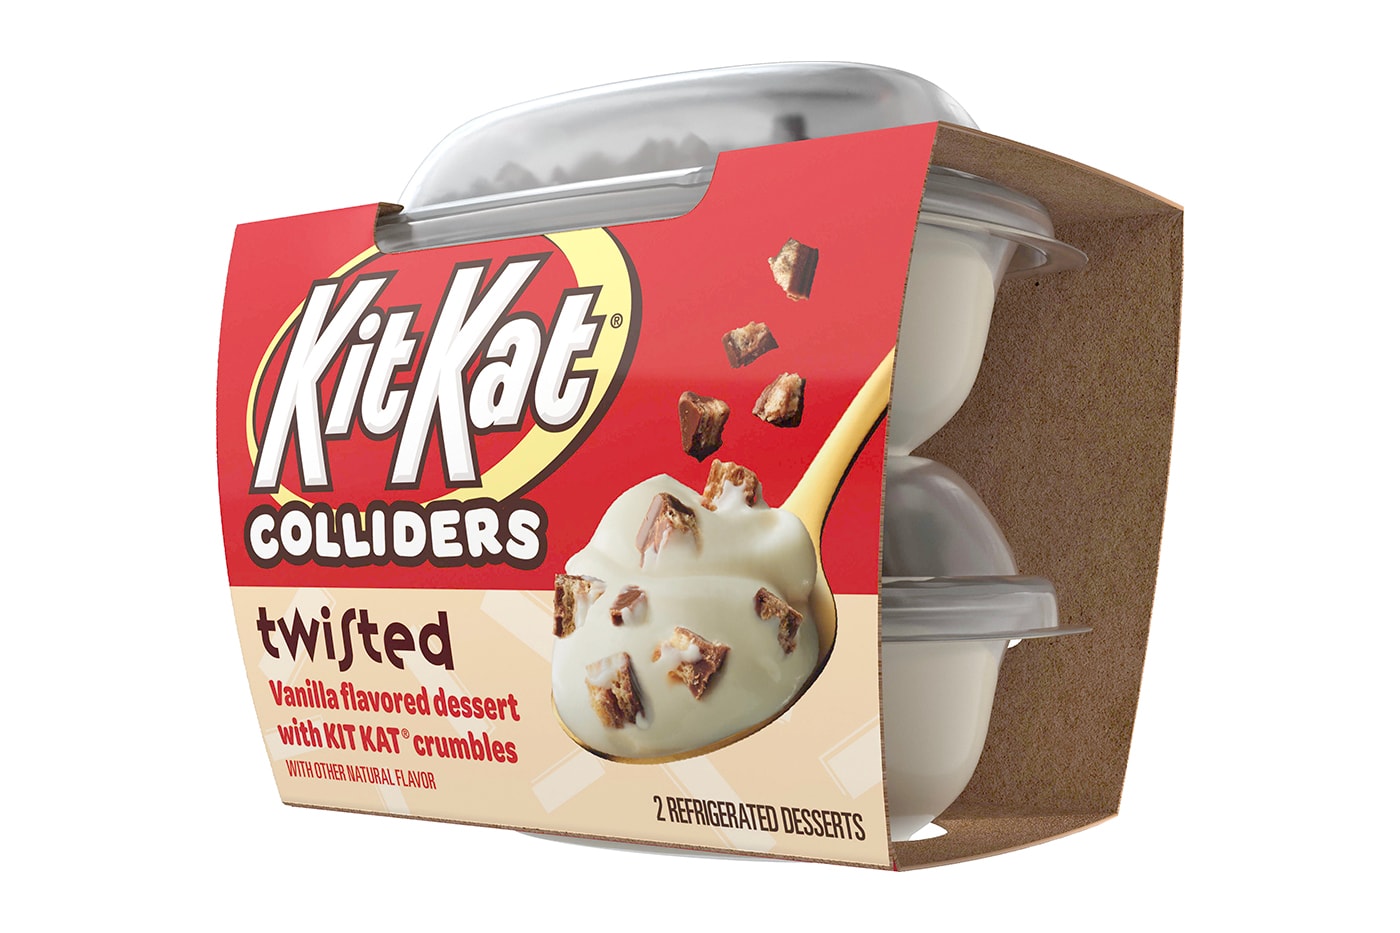 kraft heinz hershey co chocolate desserts colliders kit kat twisted vanilla